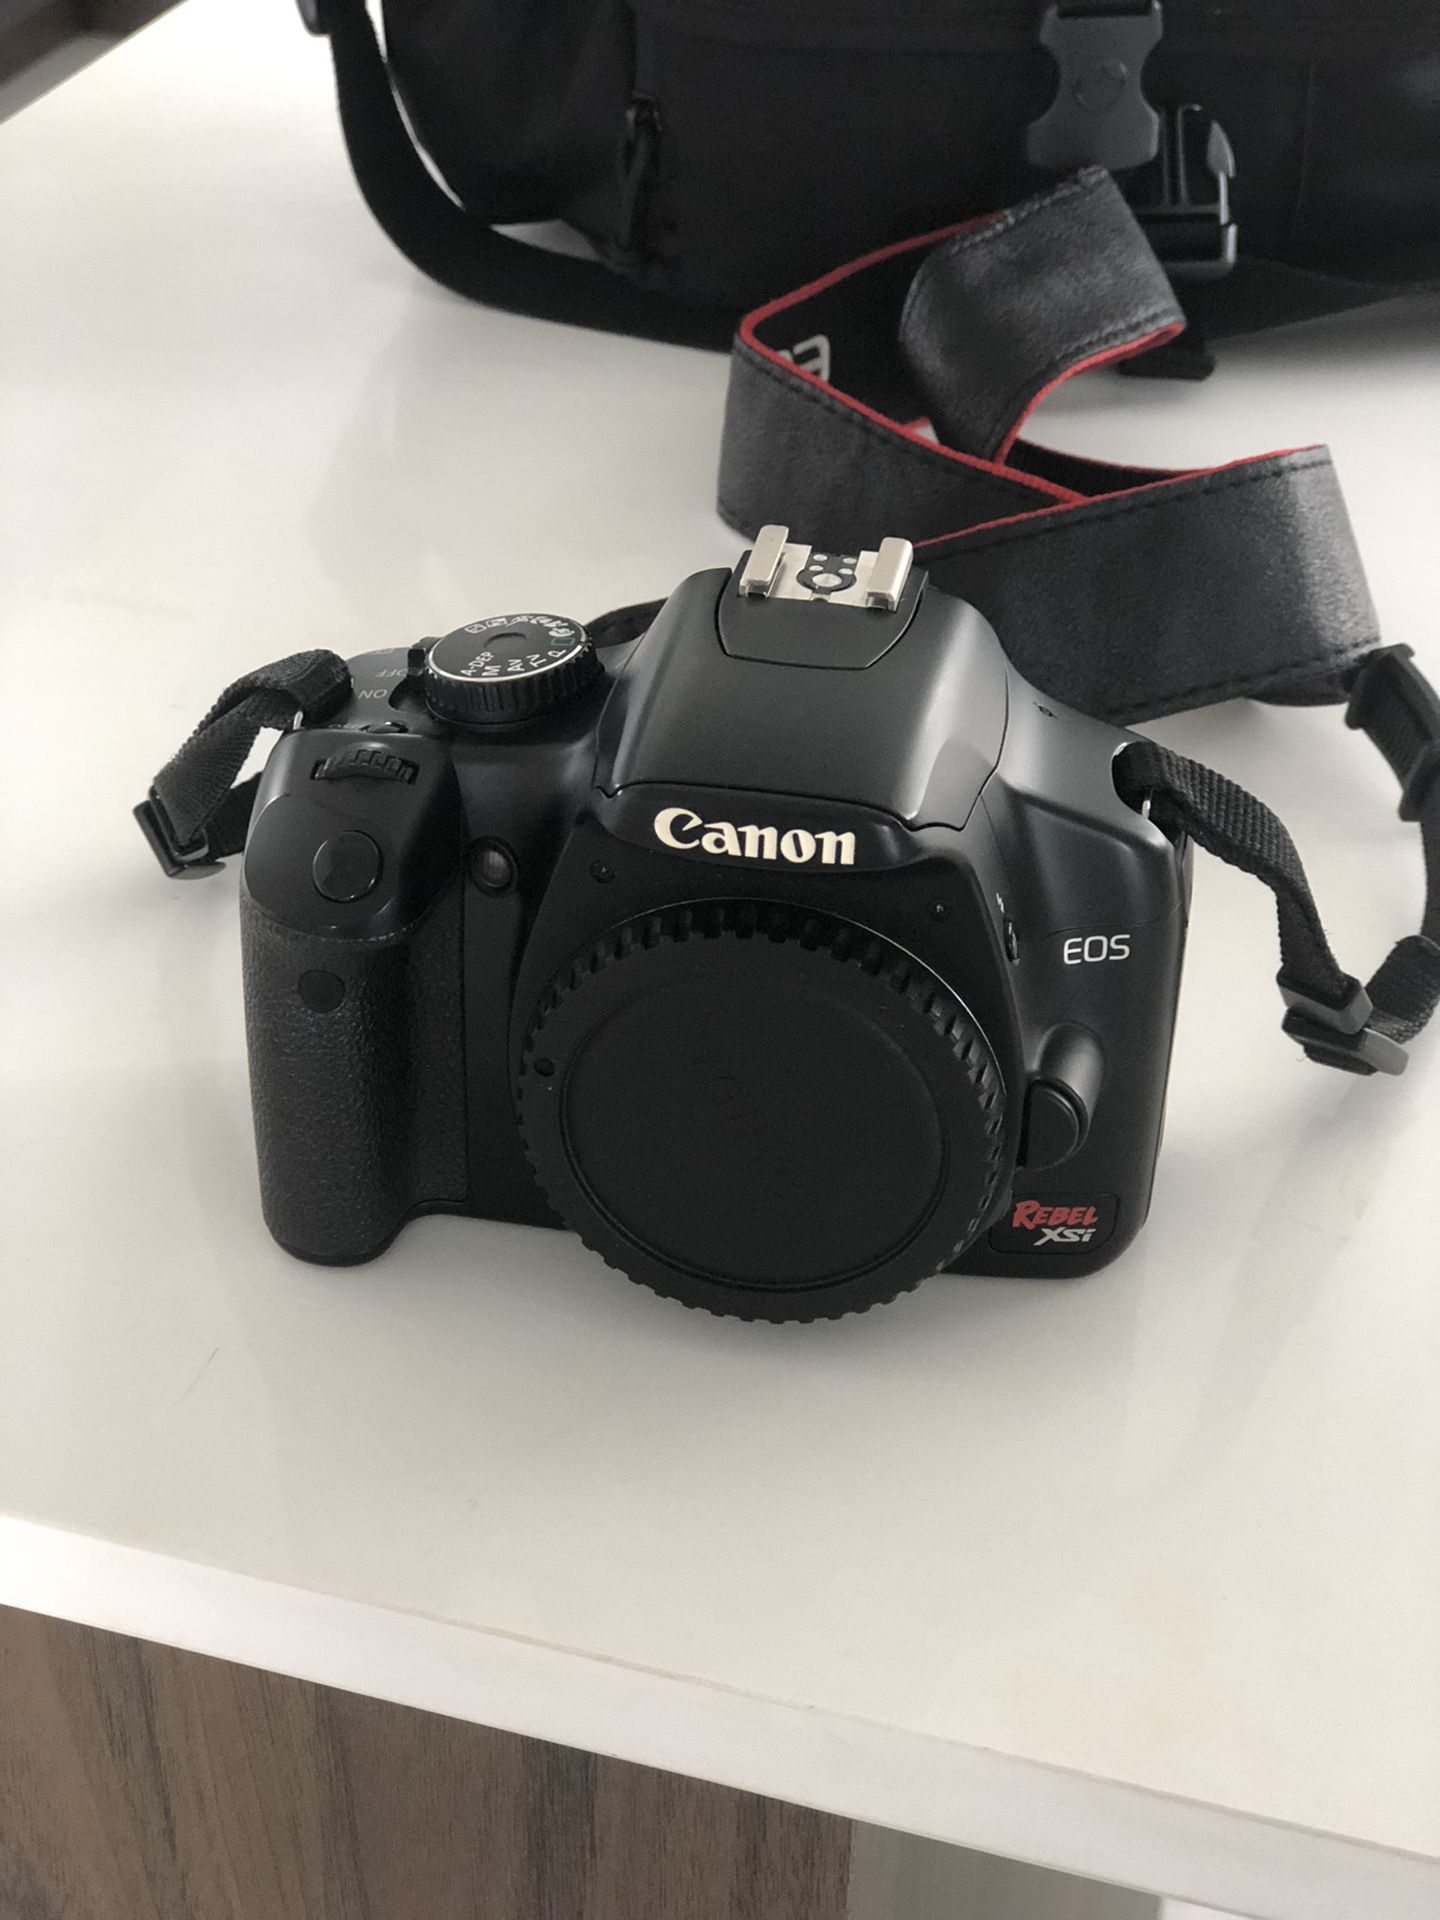 Canon photographer kit